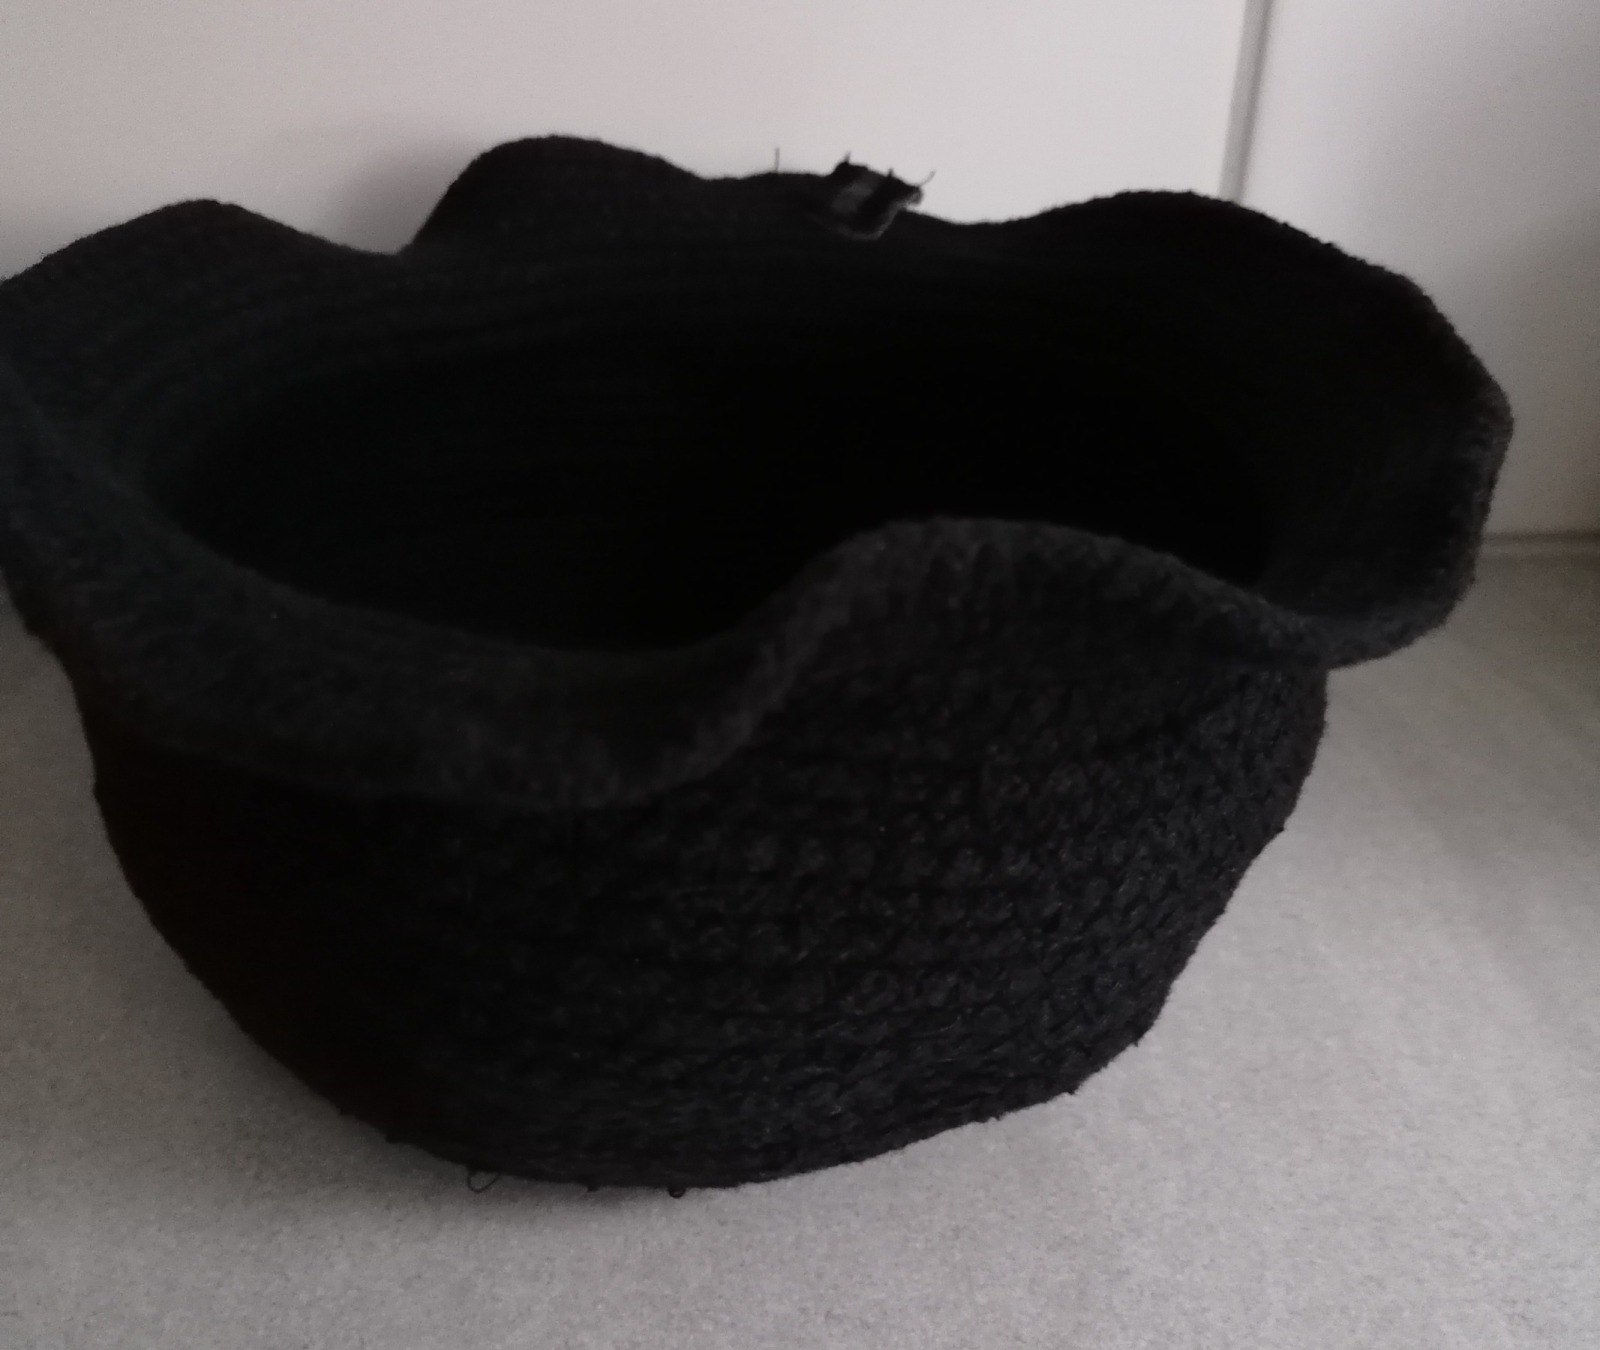 Robe Bowl schwarz 20x10 cm